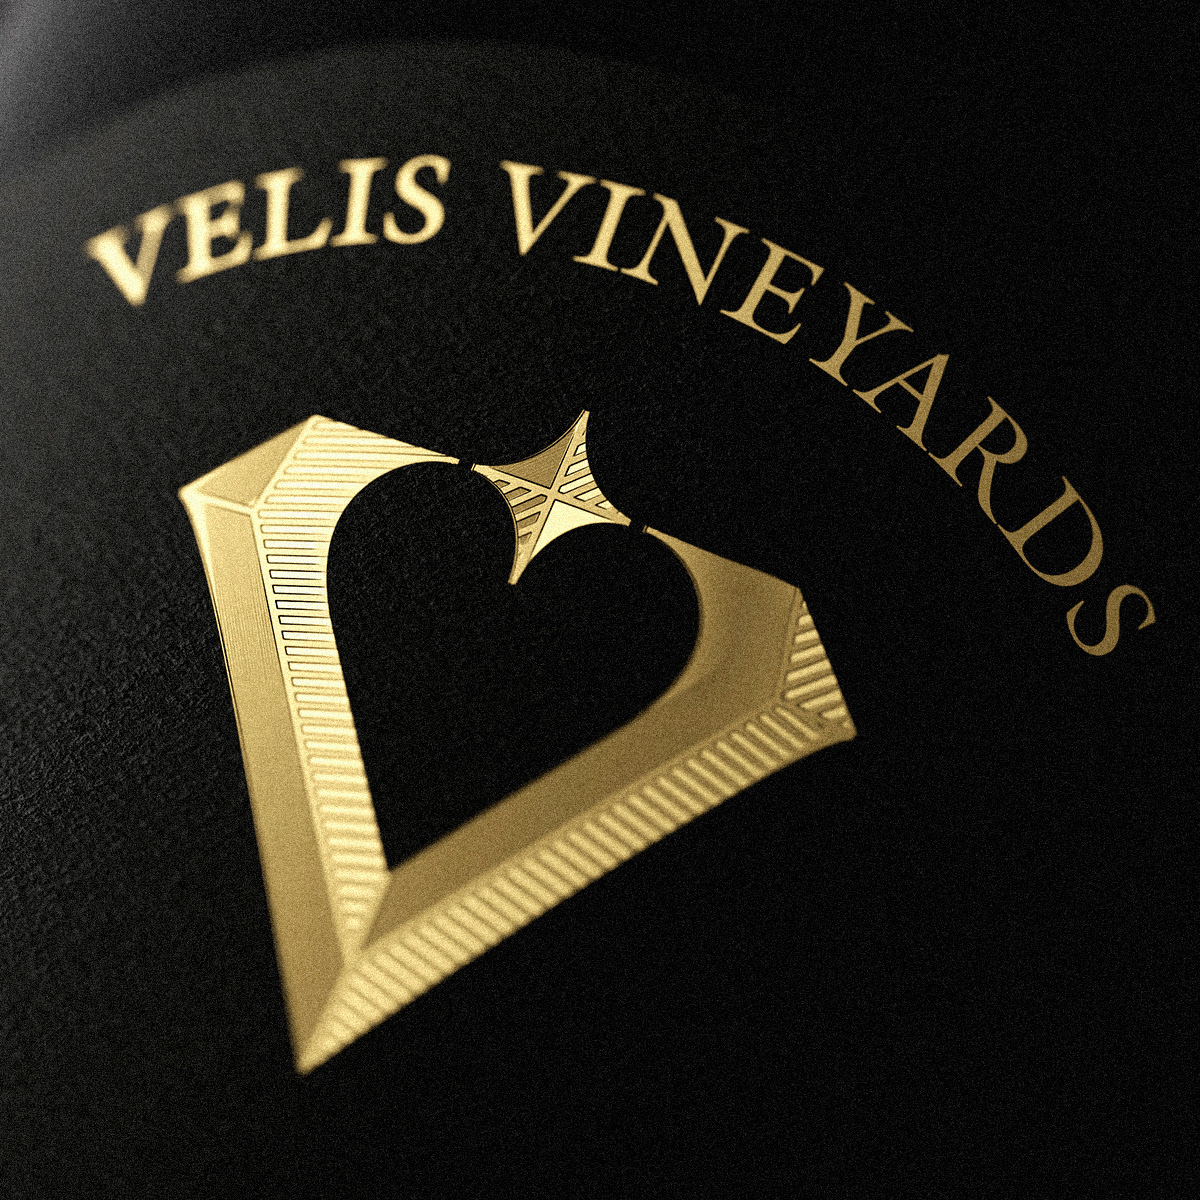 the labelmaker velis vineyards villa velis wine brand createion wine branding wine design wine label art wine label designer wine label print winery logo design